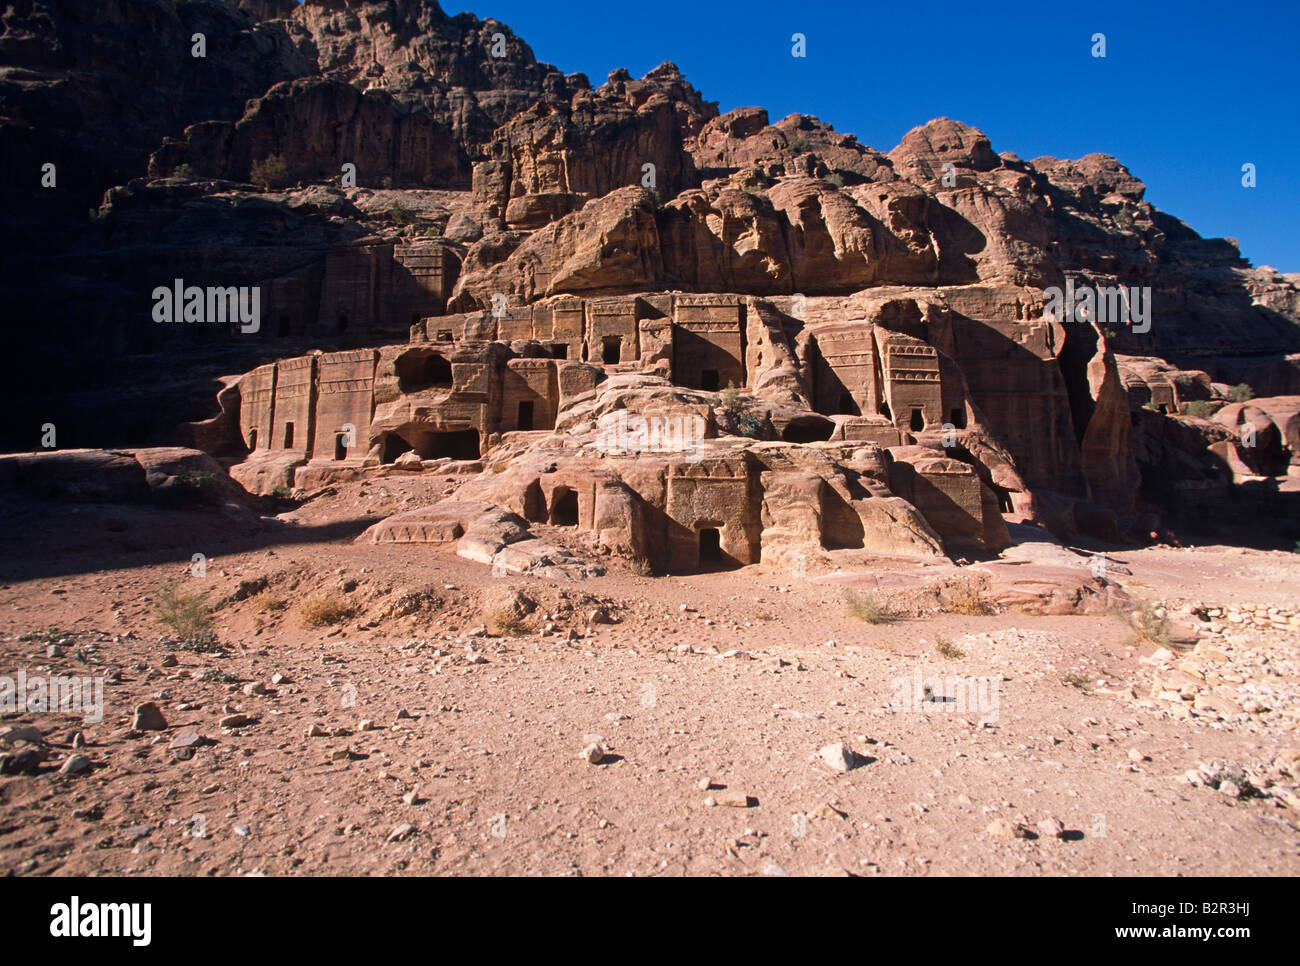 Acantilados de arenisca piedra tallada edificios, Petra, Jordania, Oriente Medio Foto de stock